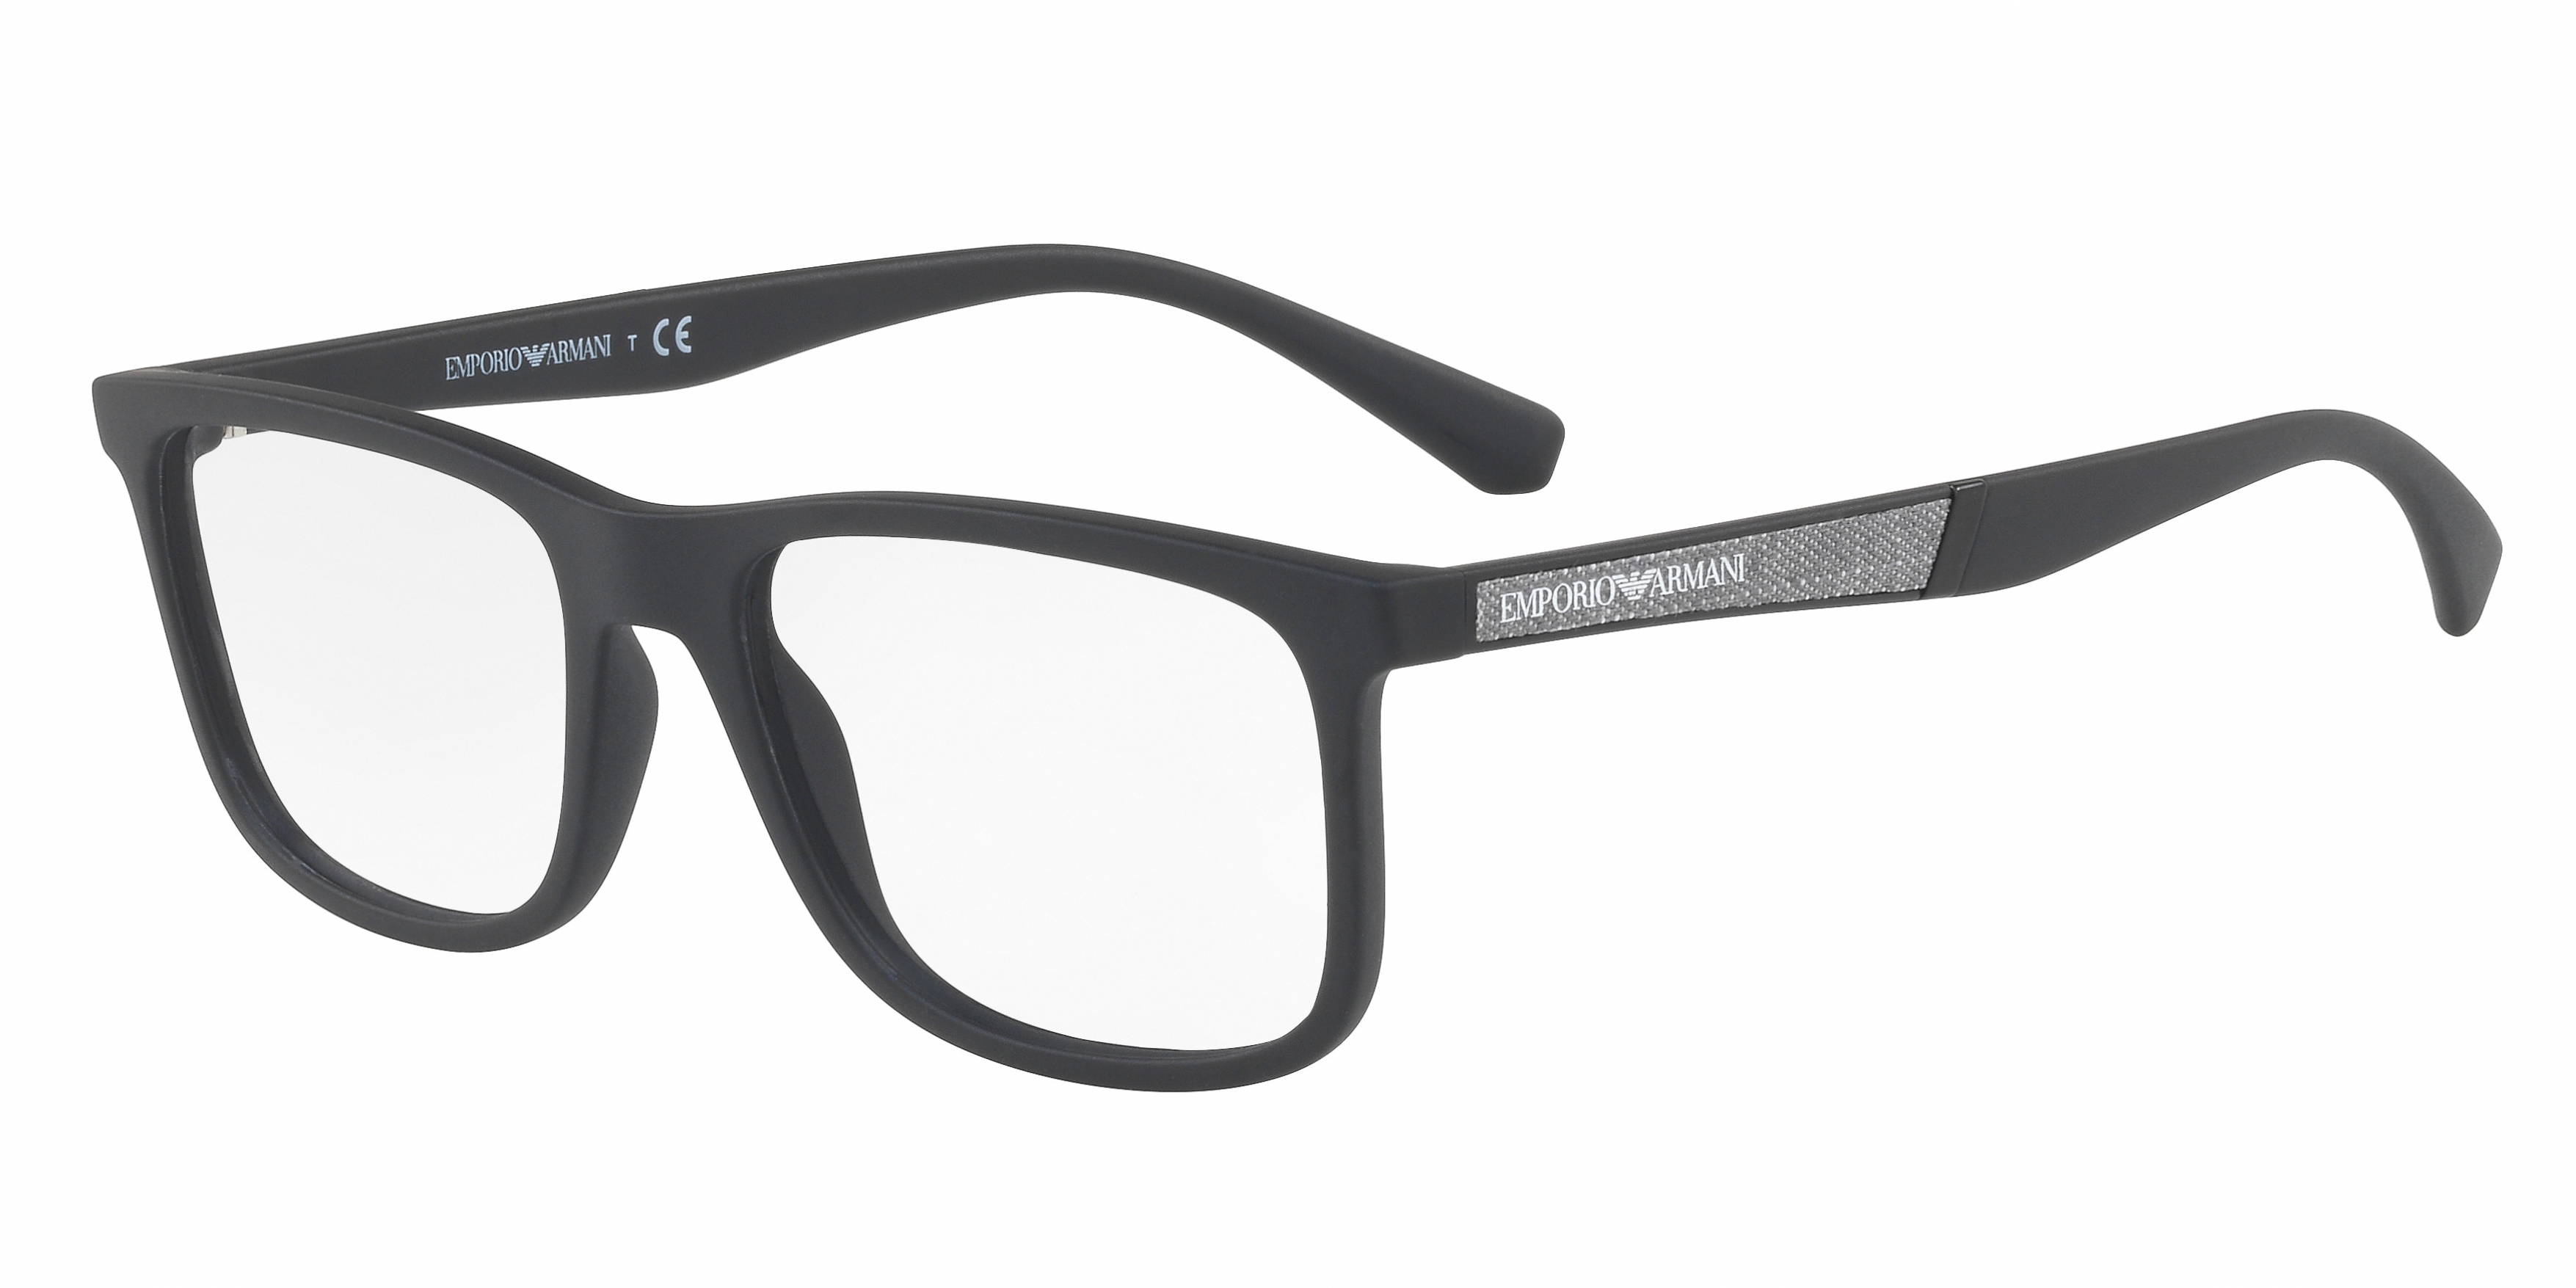 Buy Emporio Armani Eyeglasses directly from OpticsFast.com